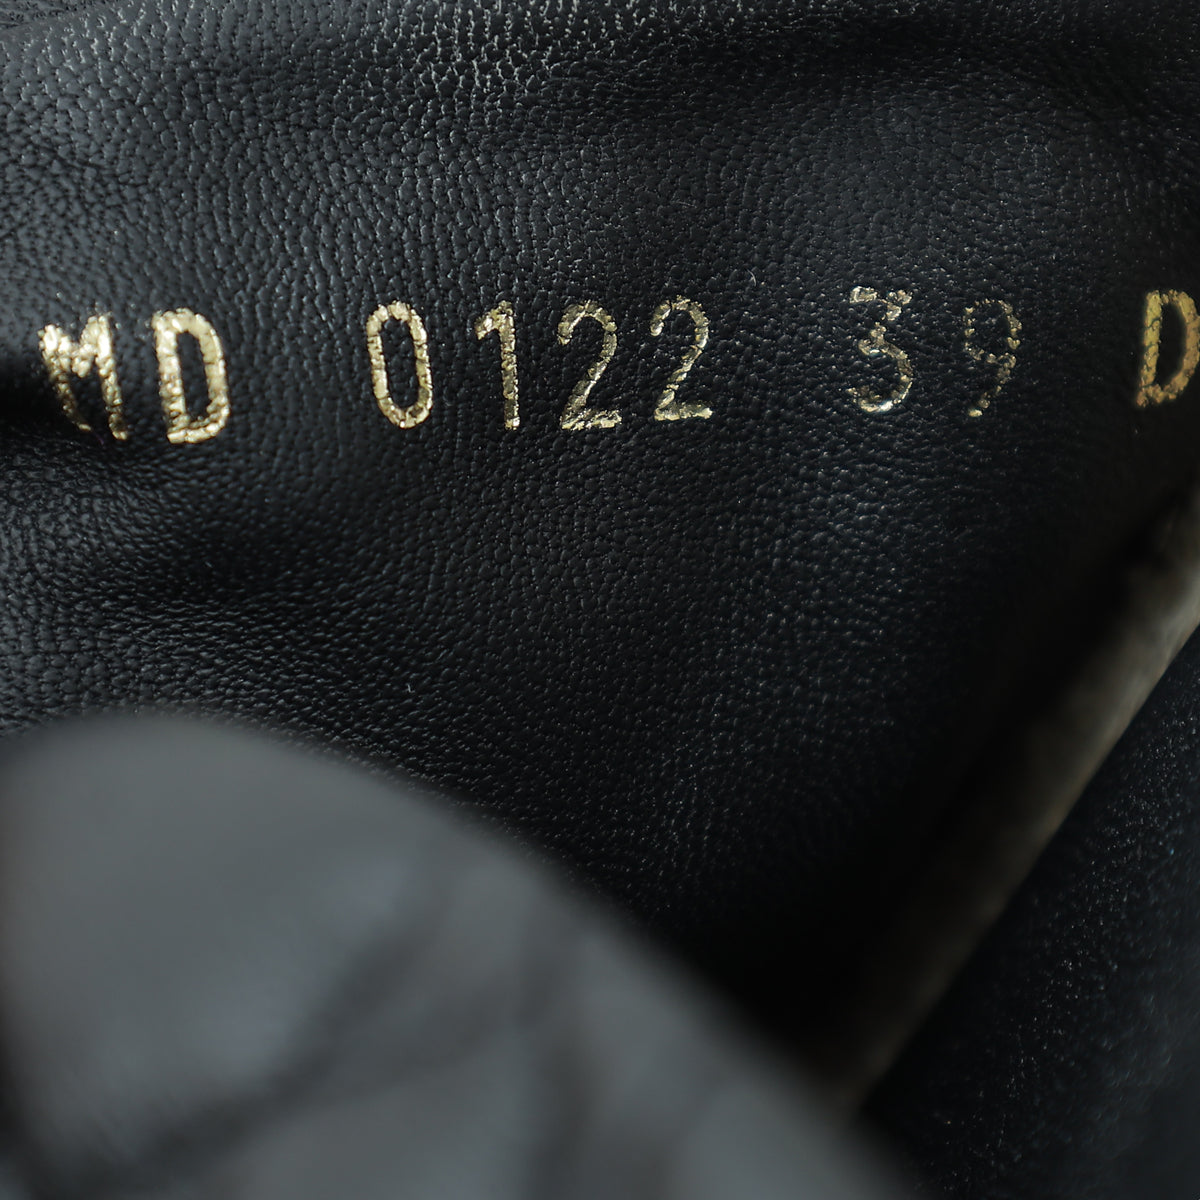 Christian Dior Black Cannage D Twist Slide Sandals 39